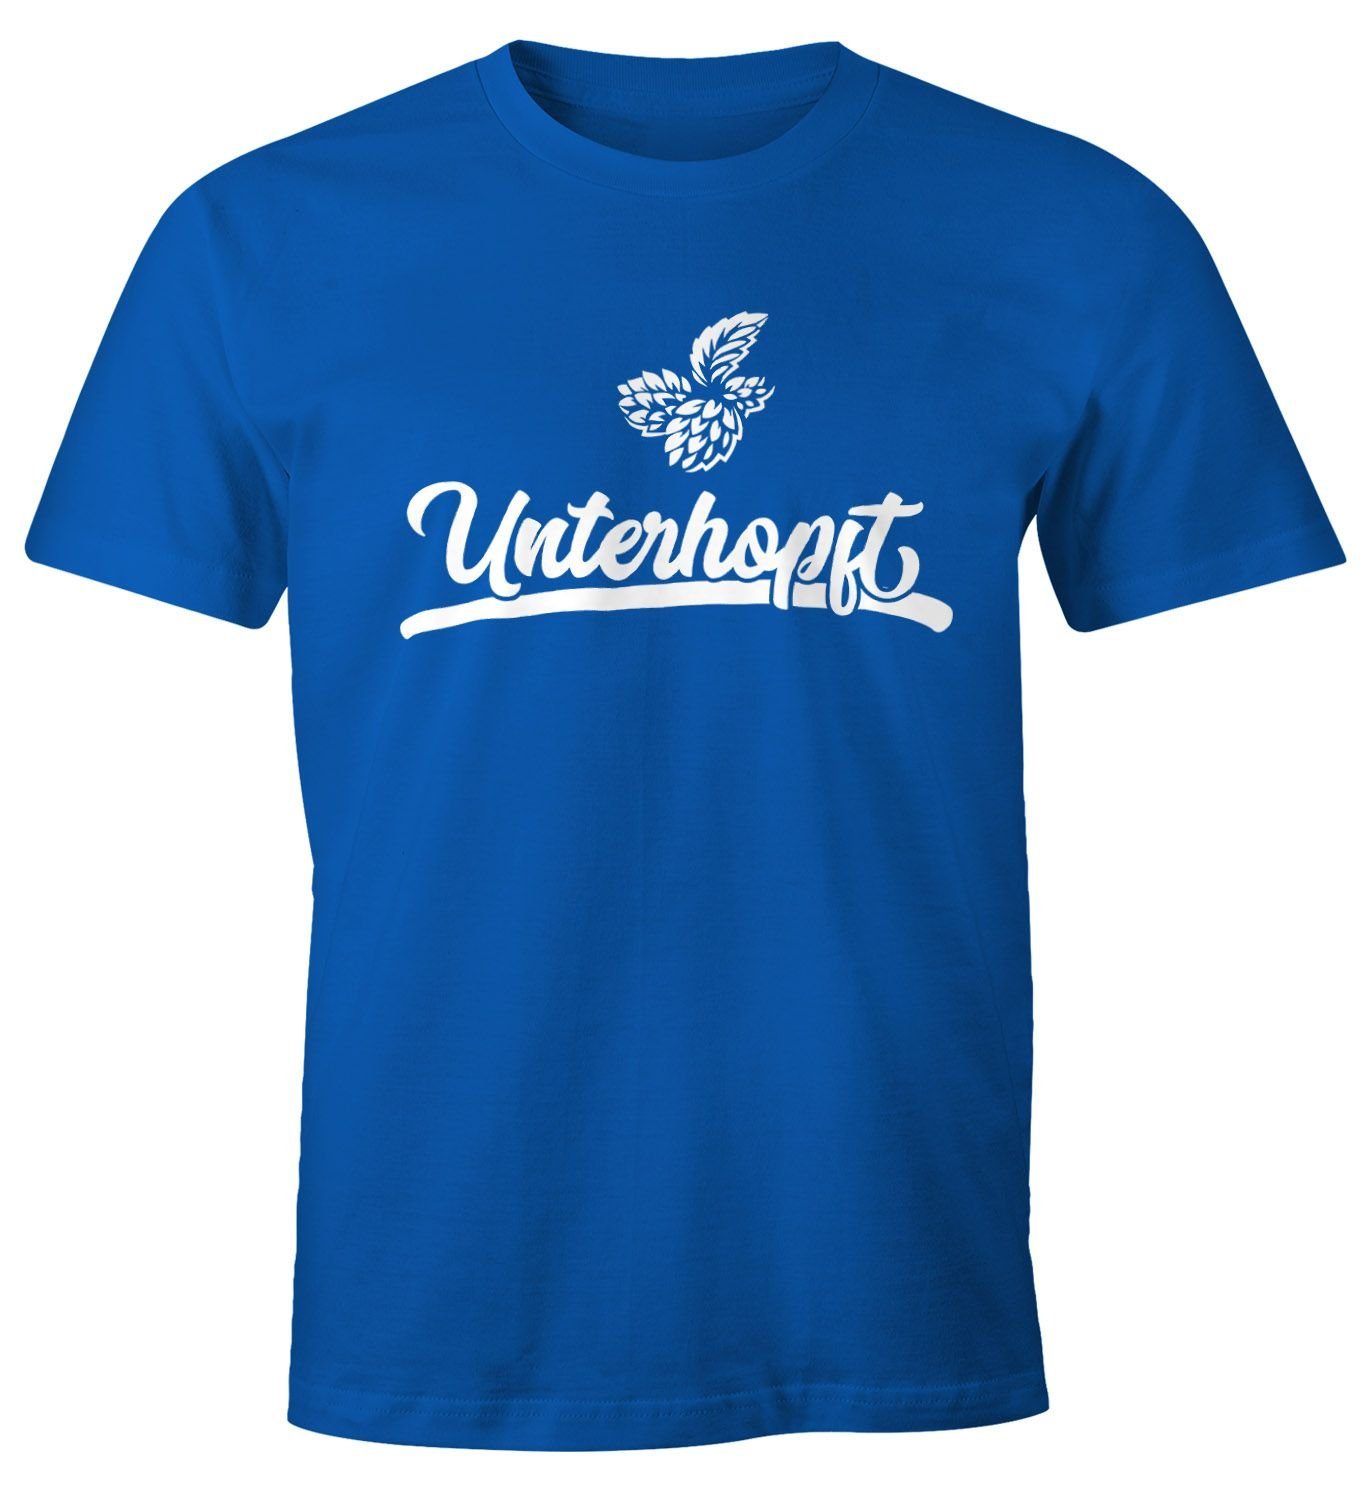 MoonWorks Print-Shirt Herren Party T-Shirt Unterhopft Bier Fun-Shirt Moonworks® mit Print blau